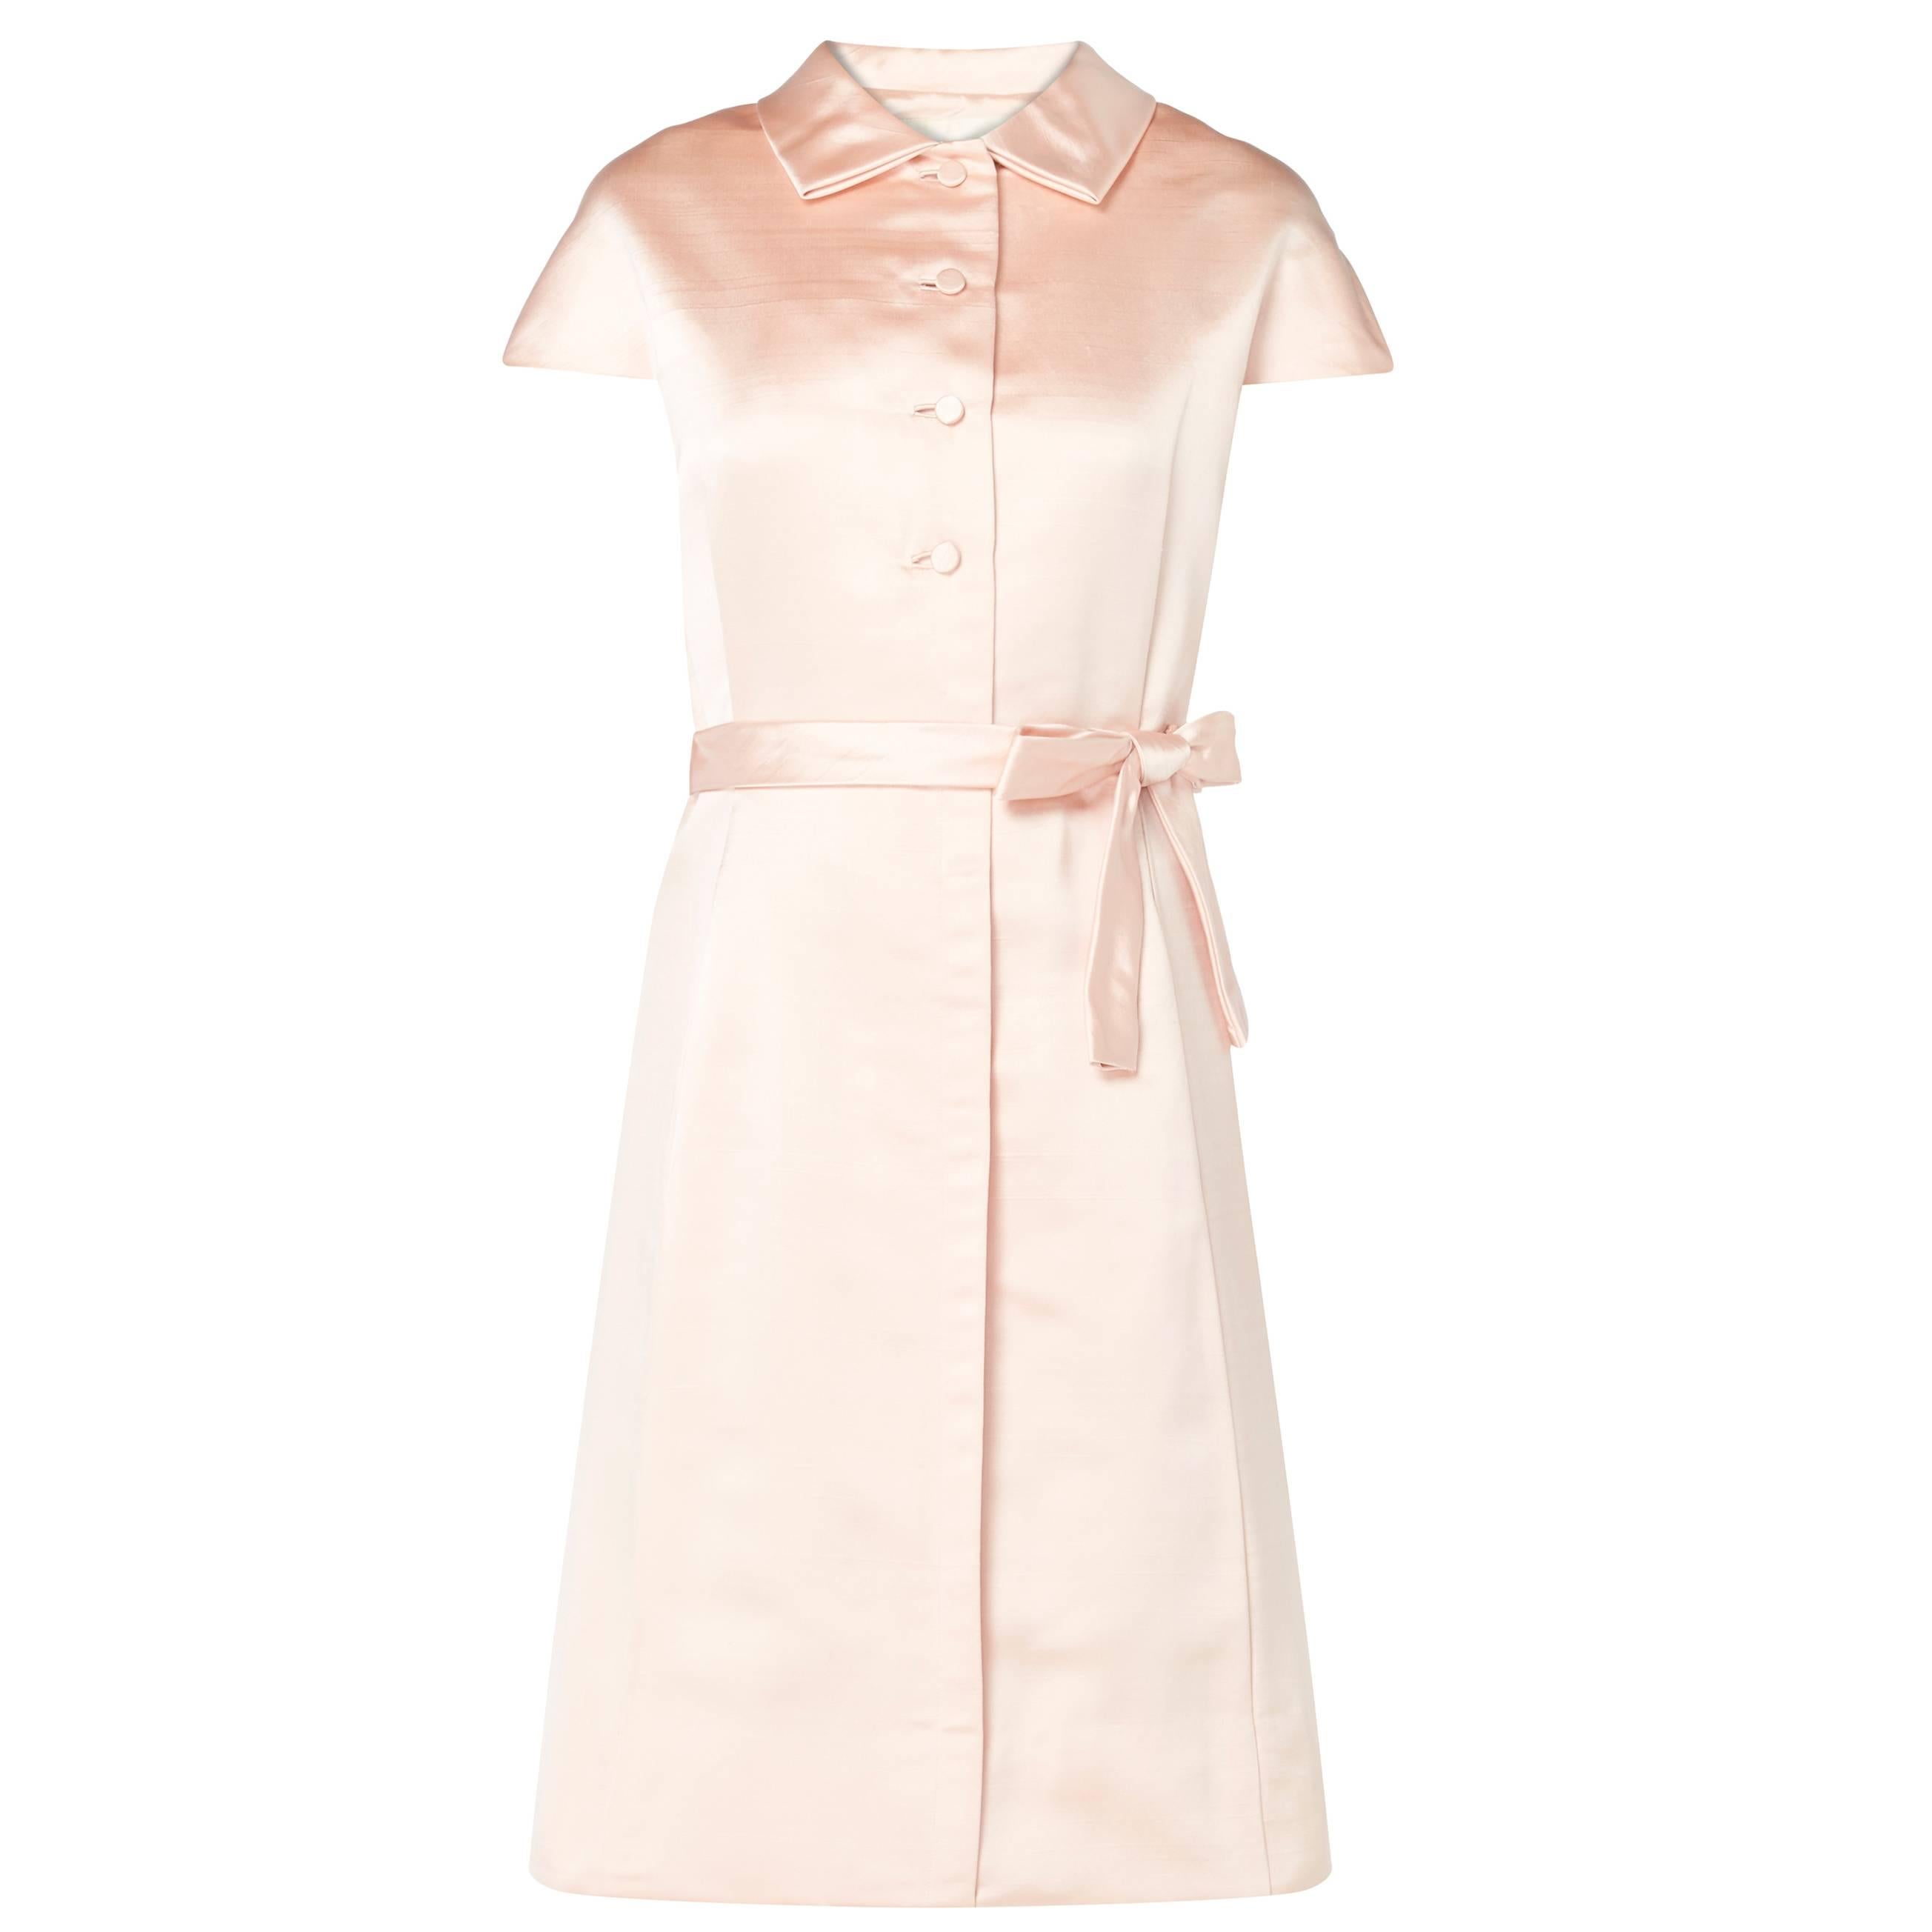 Teal Traina pink dress, circa 1965 For Sale